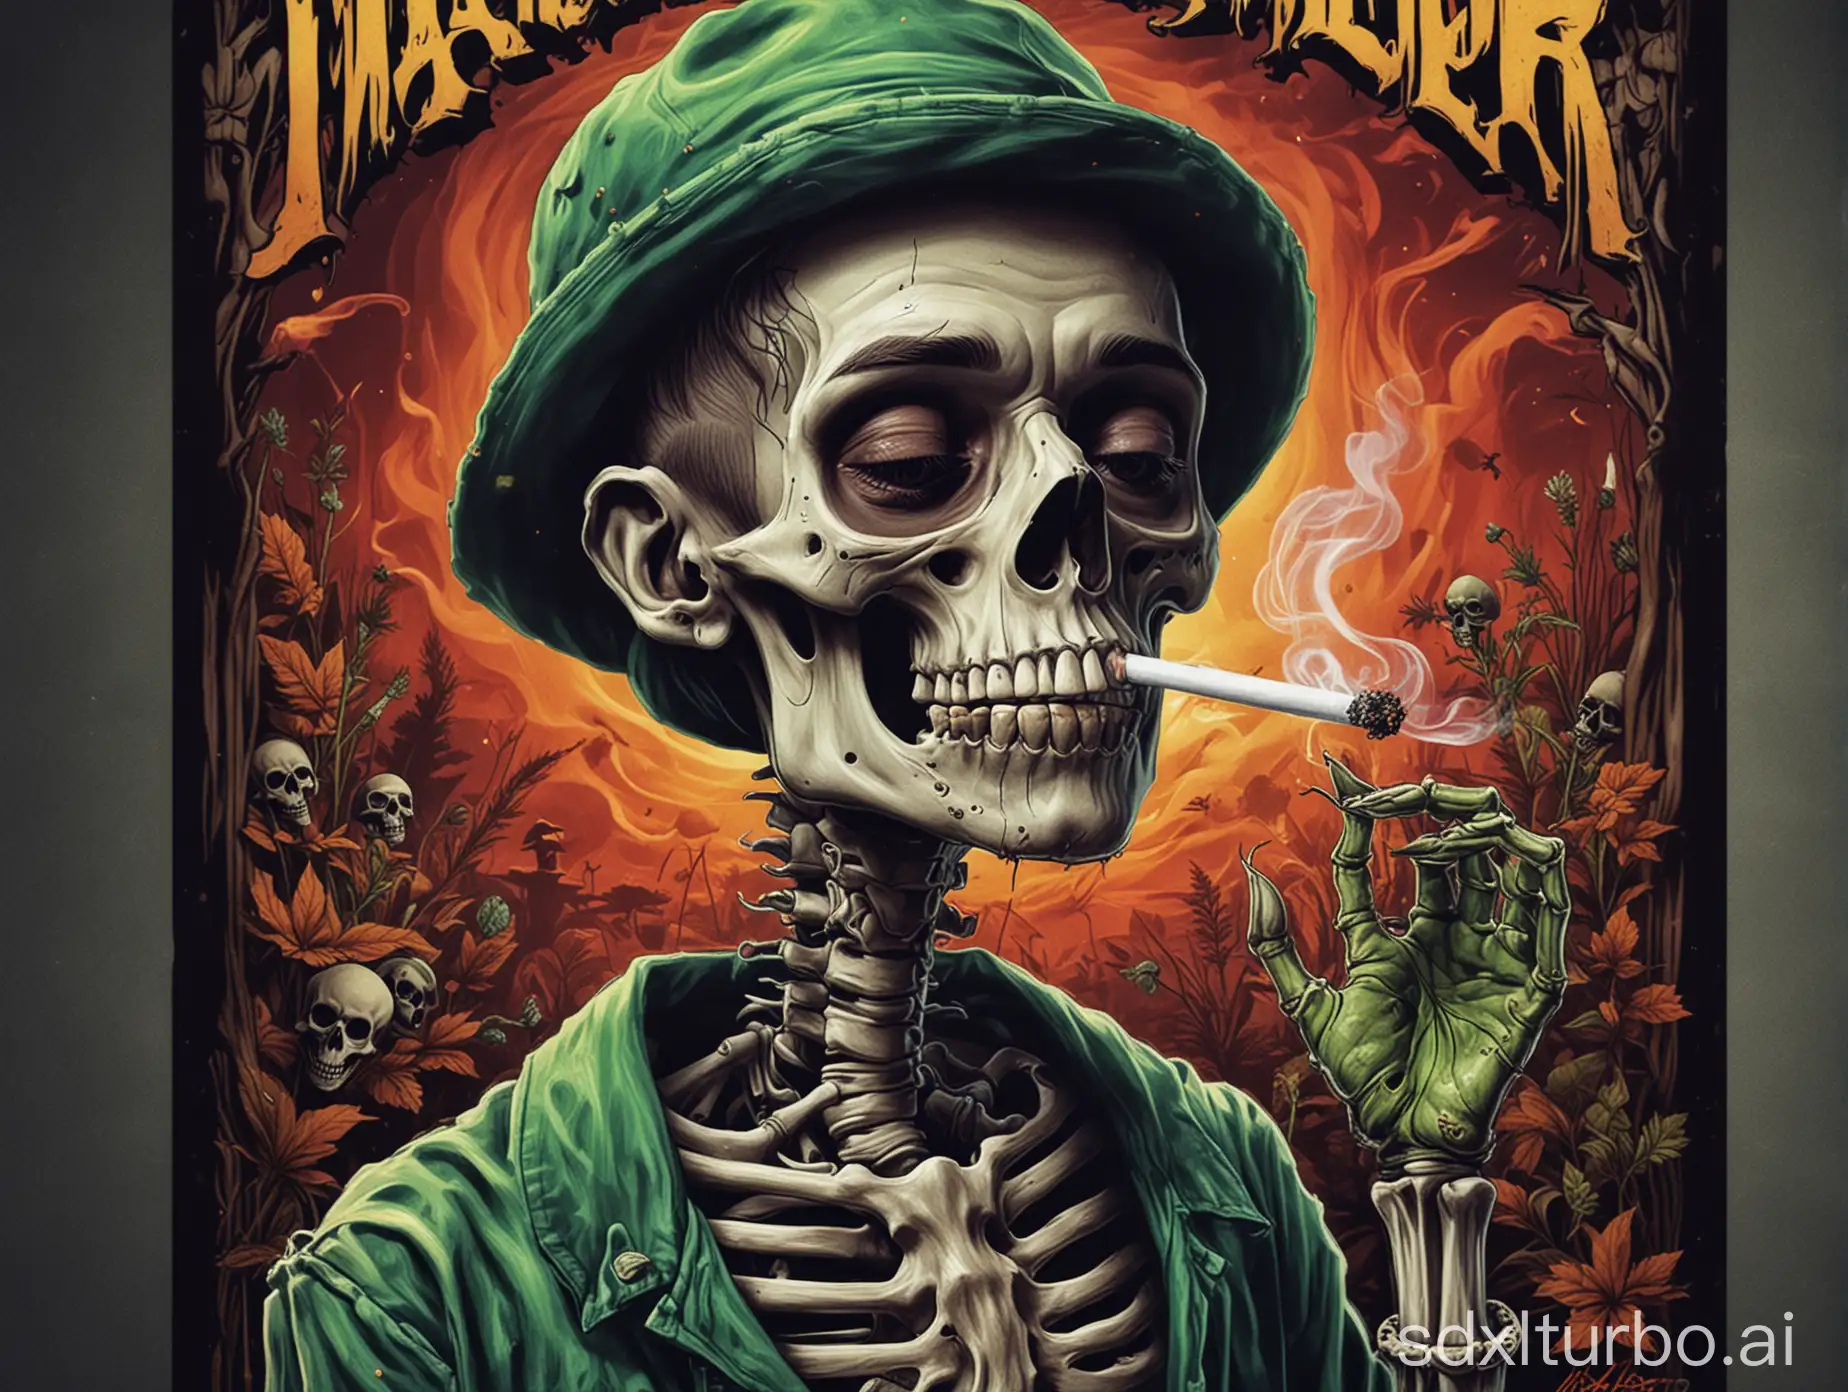 mac miller as a skeleton smoking weed, gig poster, digital art, art by munk one, art by jimbo phillips